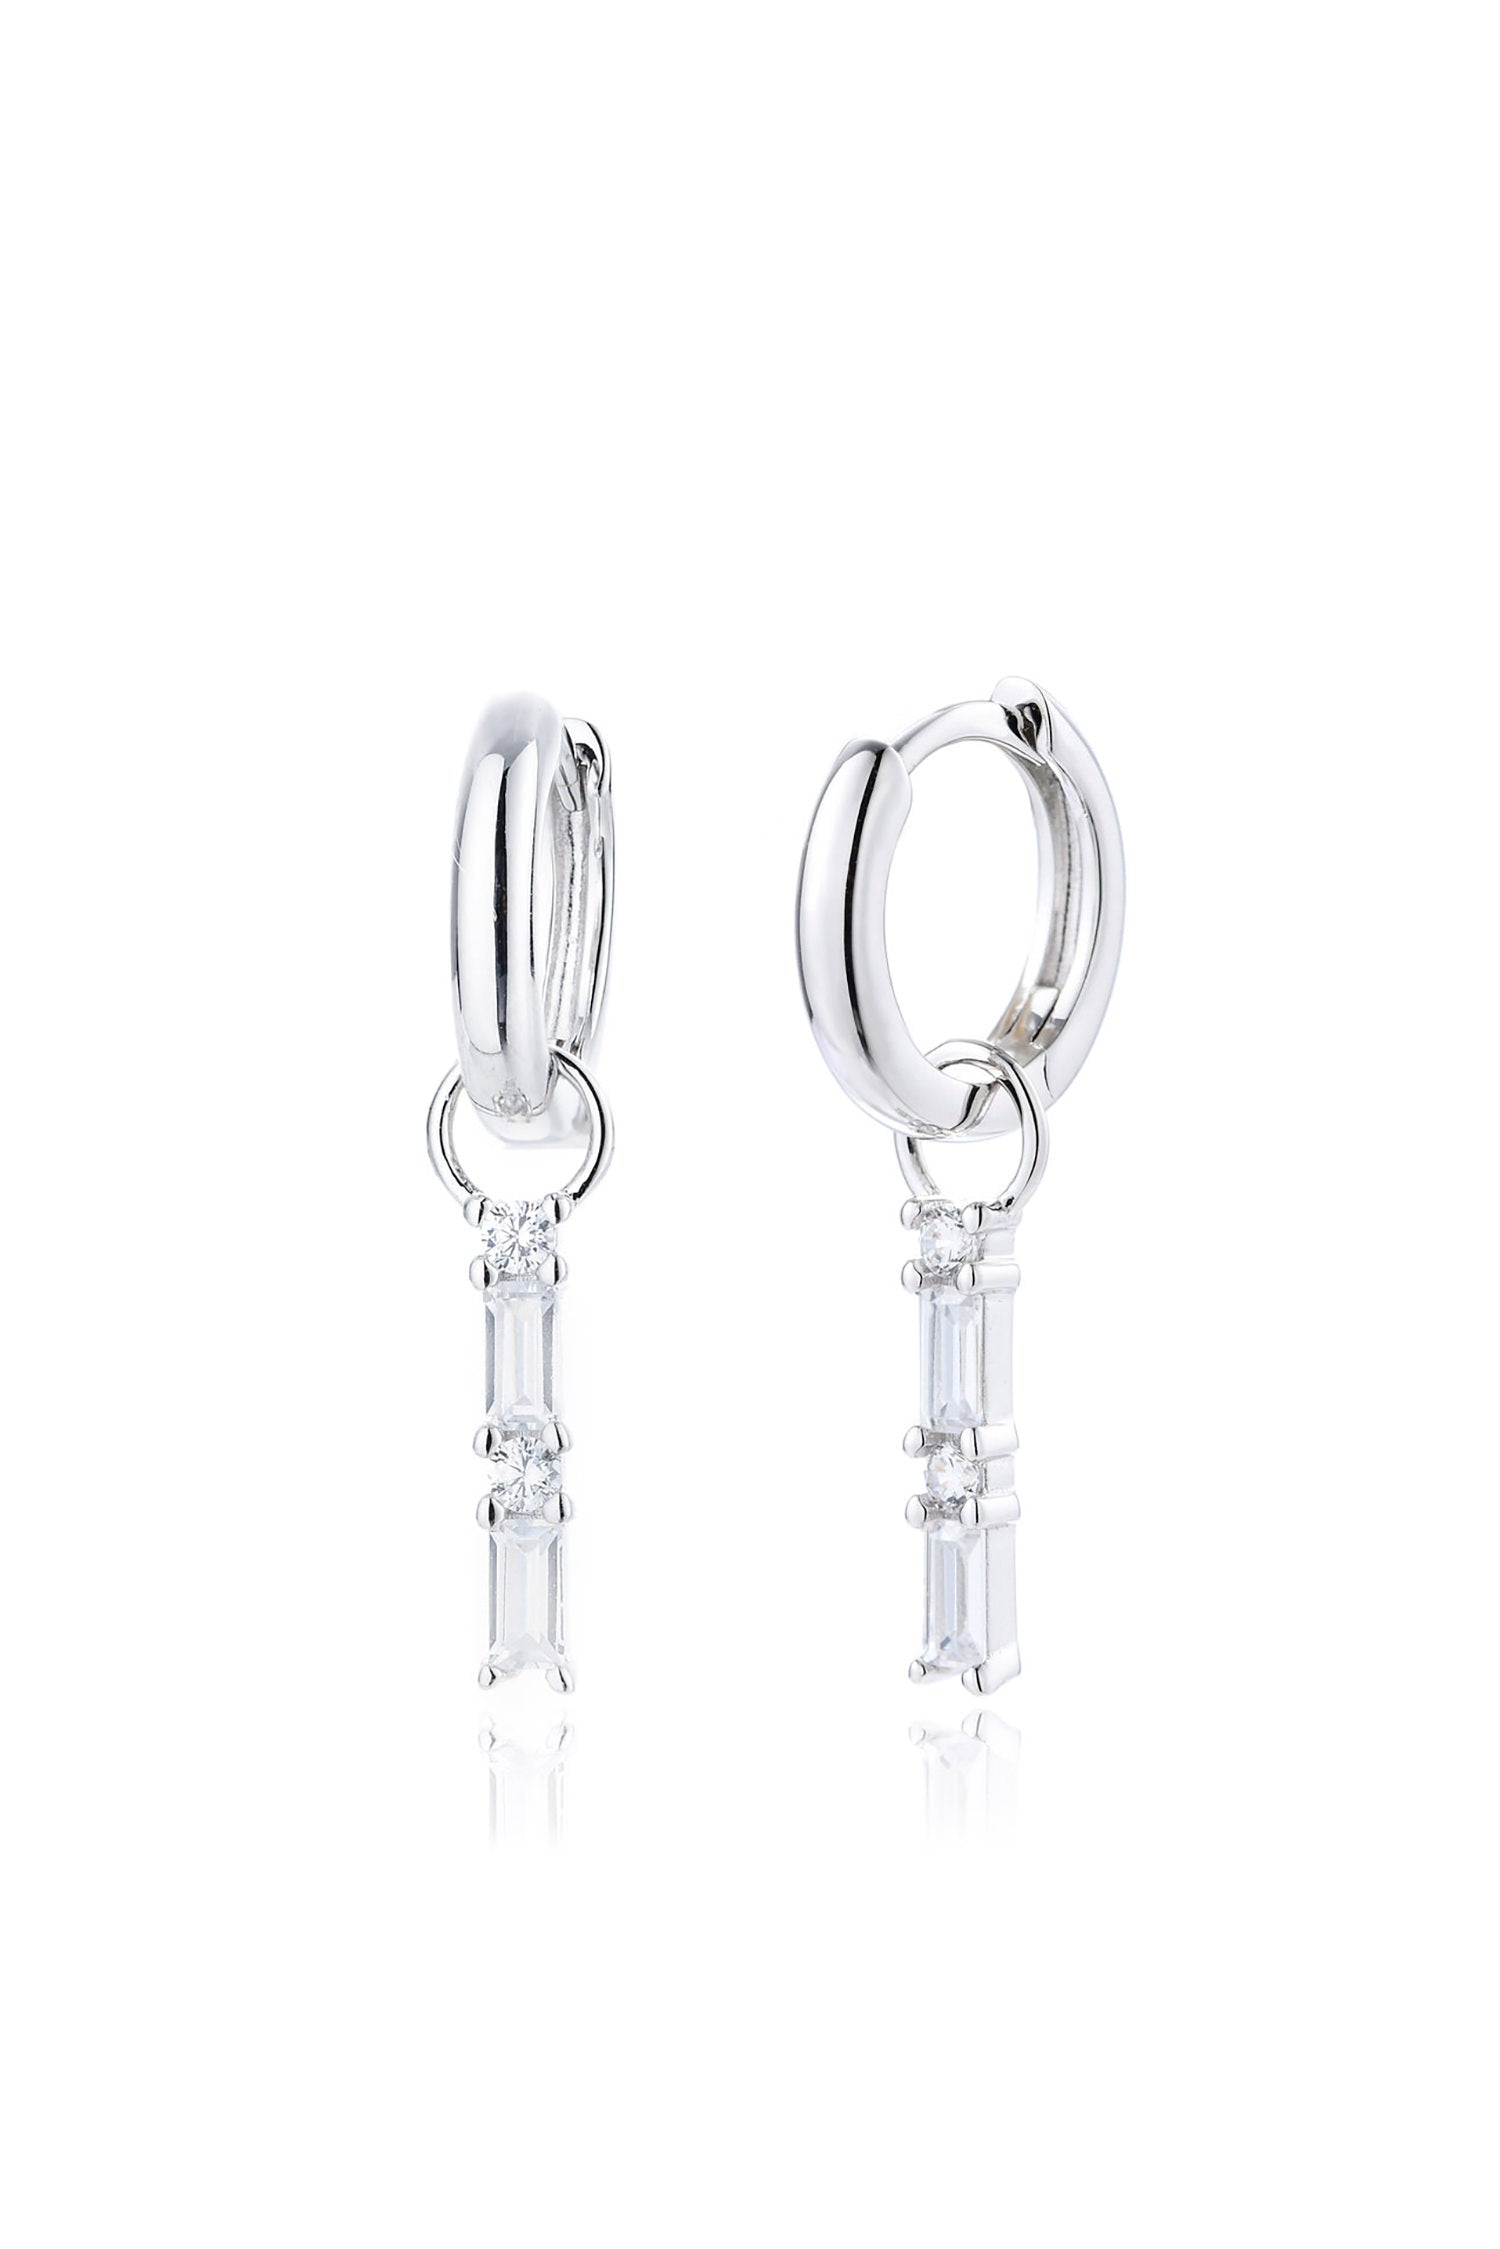  Mini Crystal Charm Hoop Earrings 14k Sterling Silver White Background